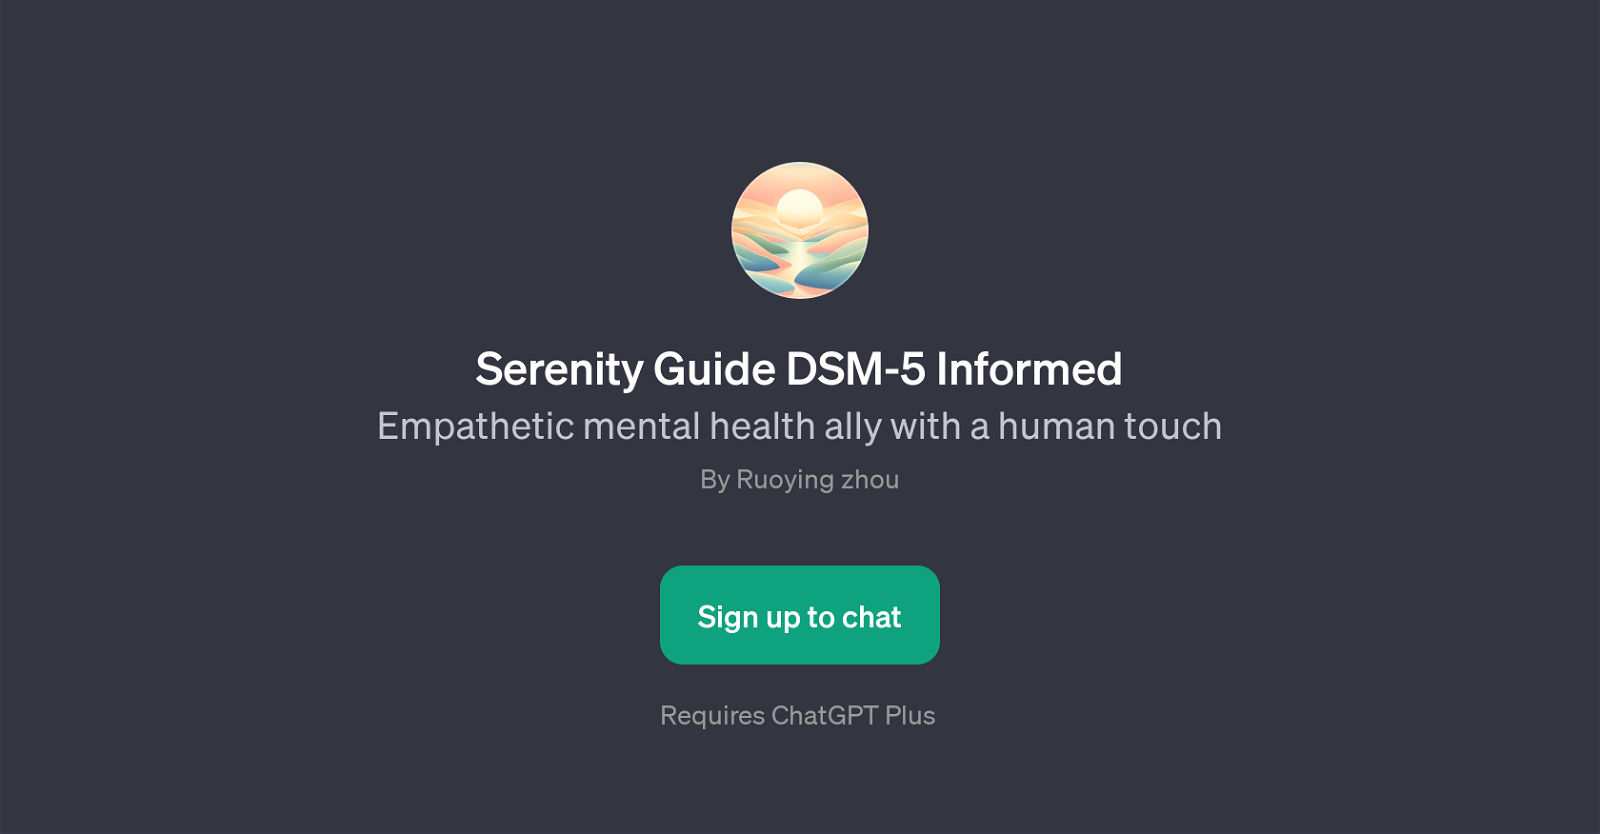 Serenity Guide DSM-5 Informed website